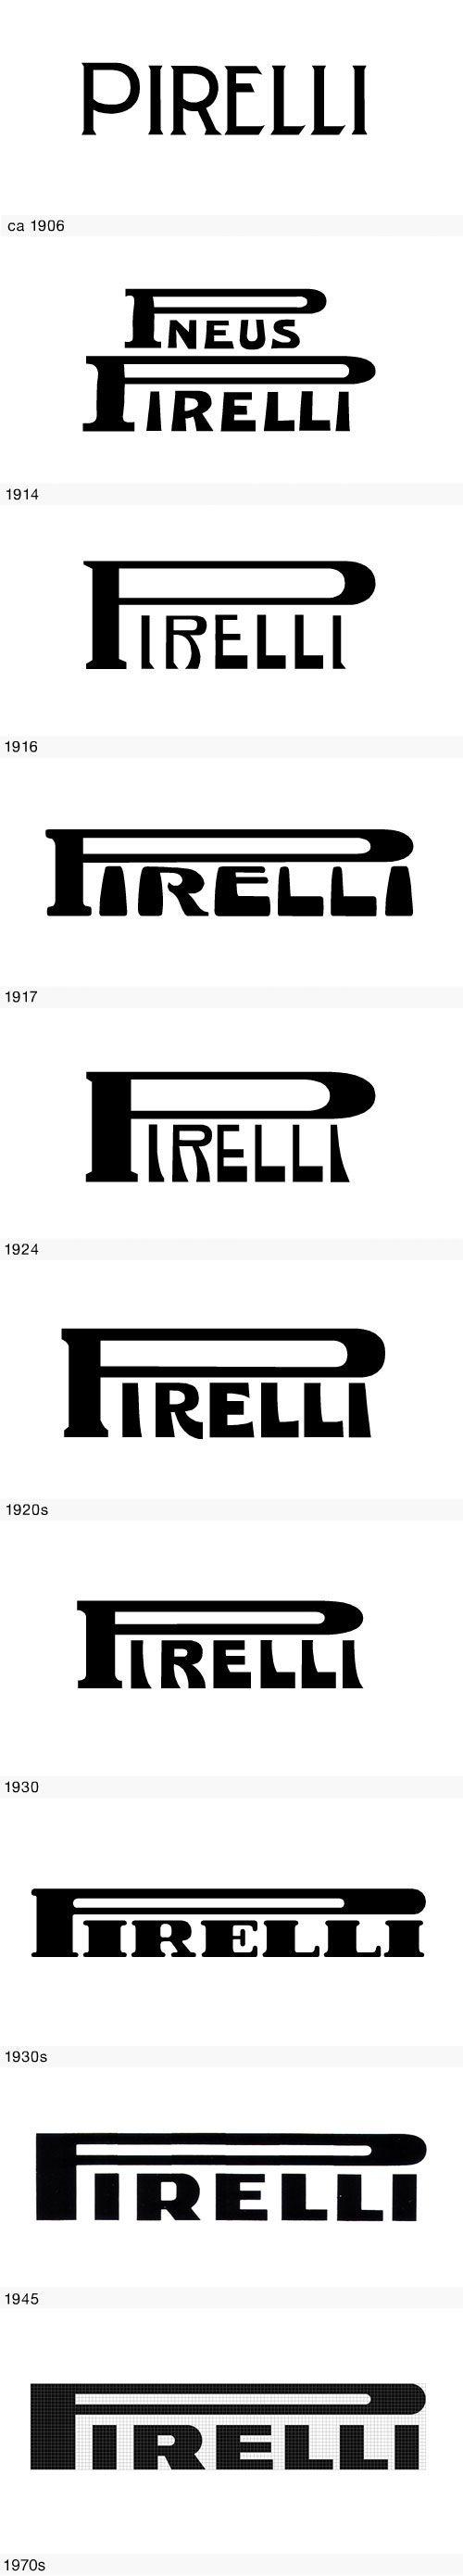 Pirelli Logo - Pirelli logo evolution. Logo Design Love